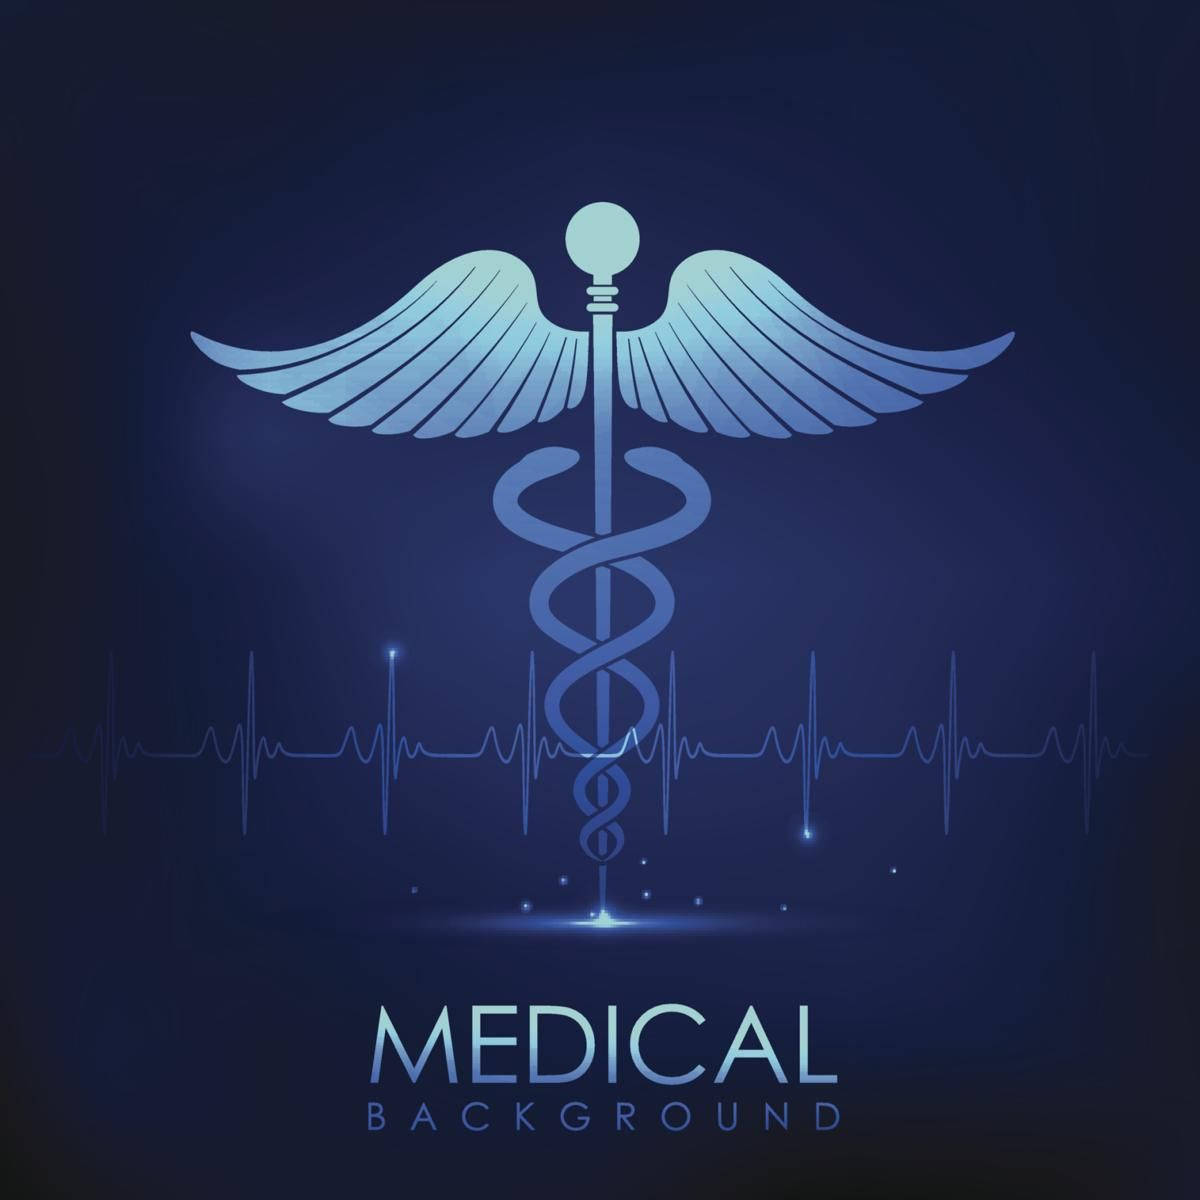 Blue And White Lifeline Medical Symbol Wallpaper